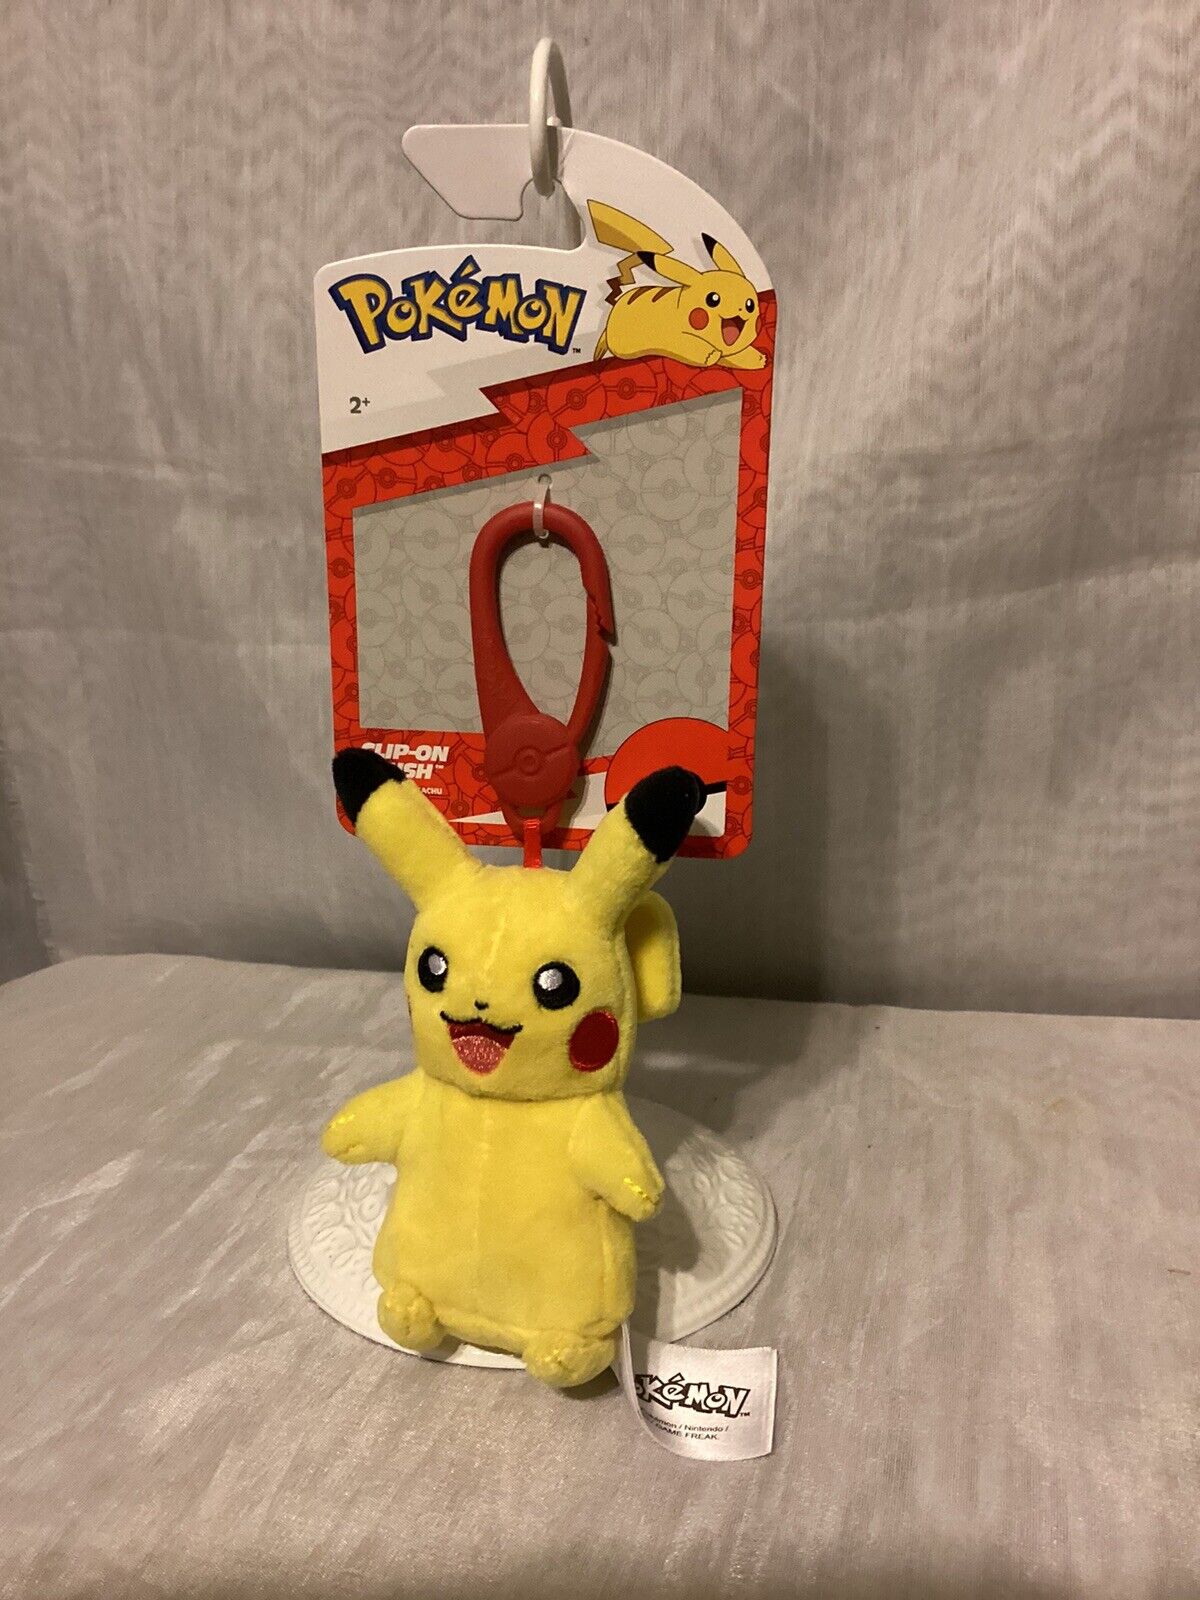  Pokémon “Pikachu” Plush Clip On NWT